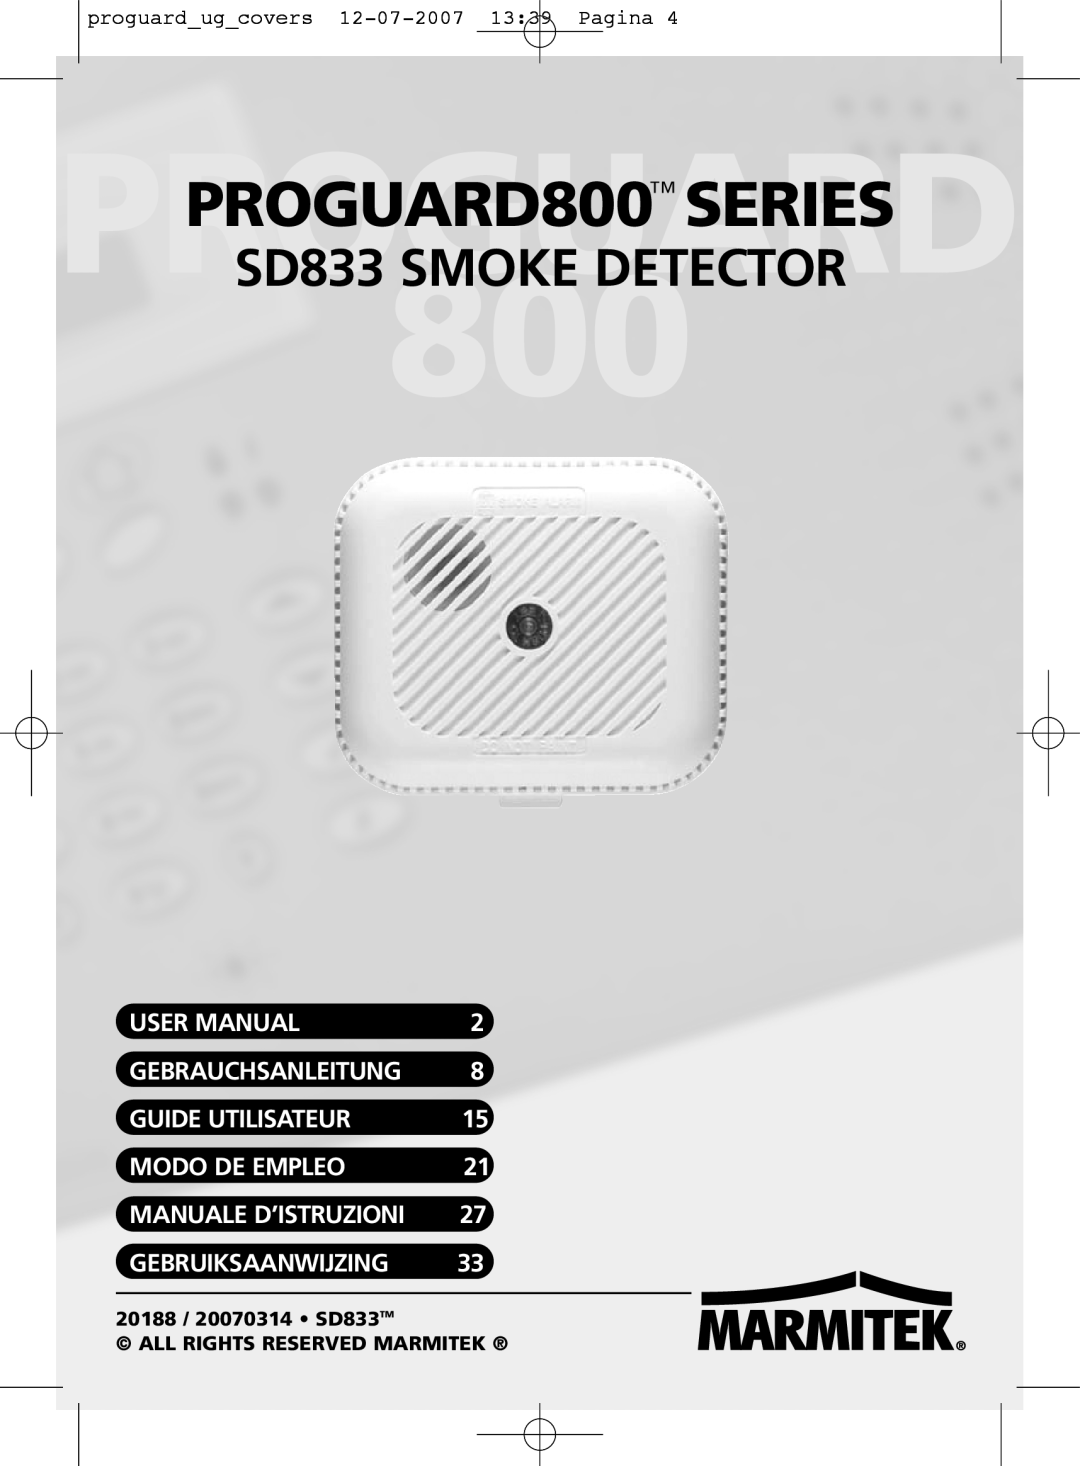 Marmitek user manual SD833 SMOKE DETECTOR, Guide Utilisateur, Modo De Empleo, Manuale D’Istruzioni, Gebruiksaanwijzing 